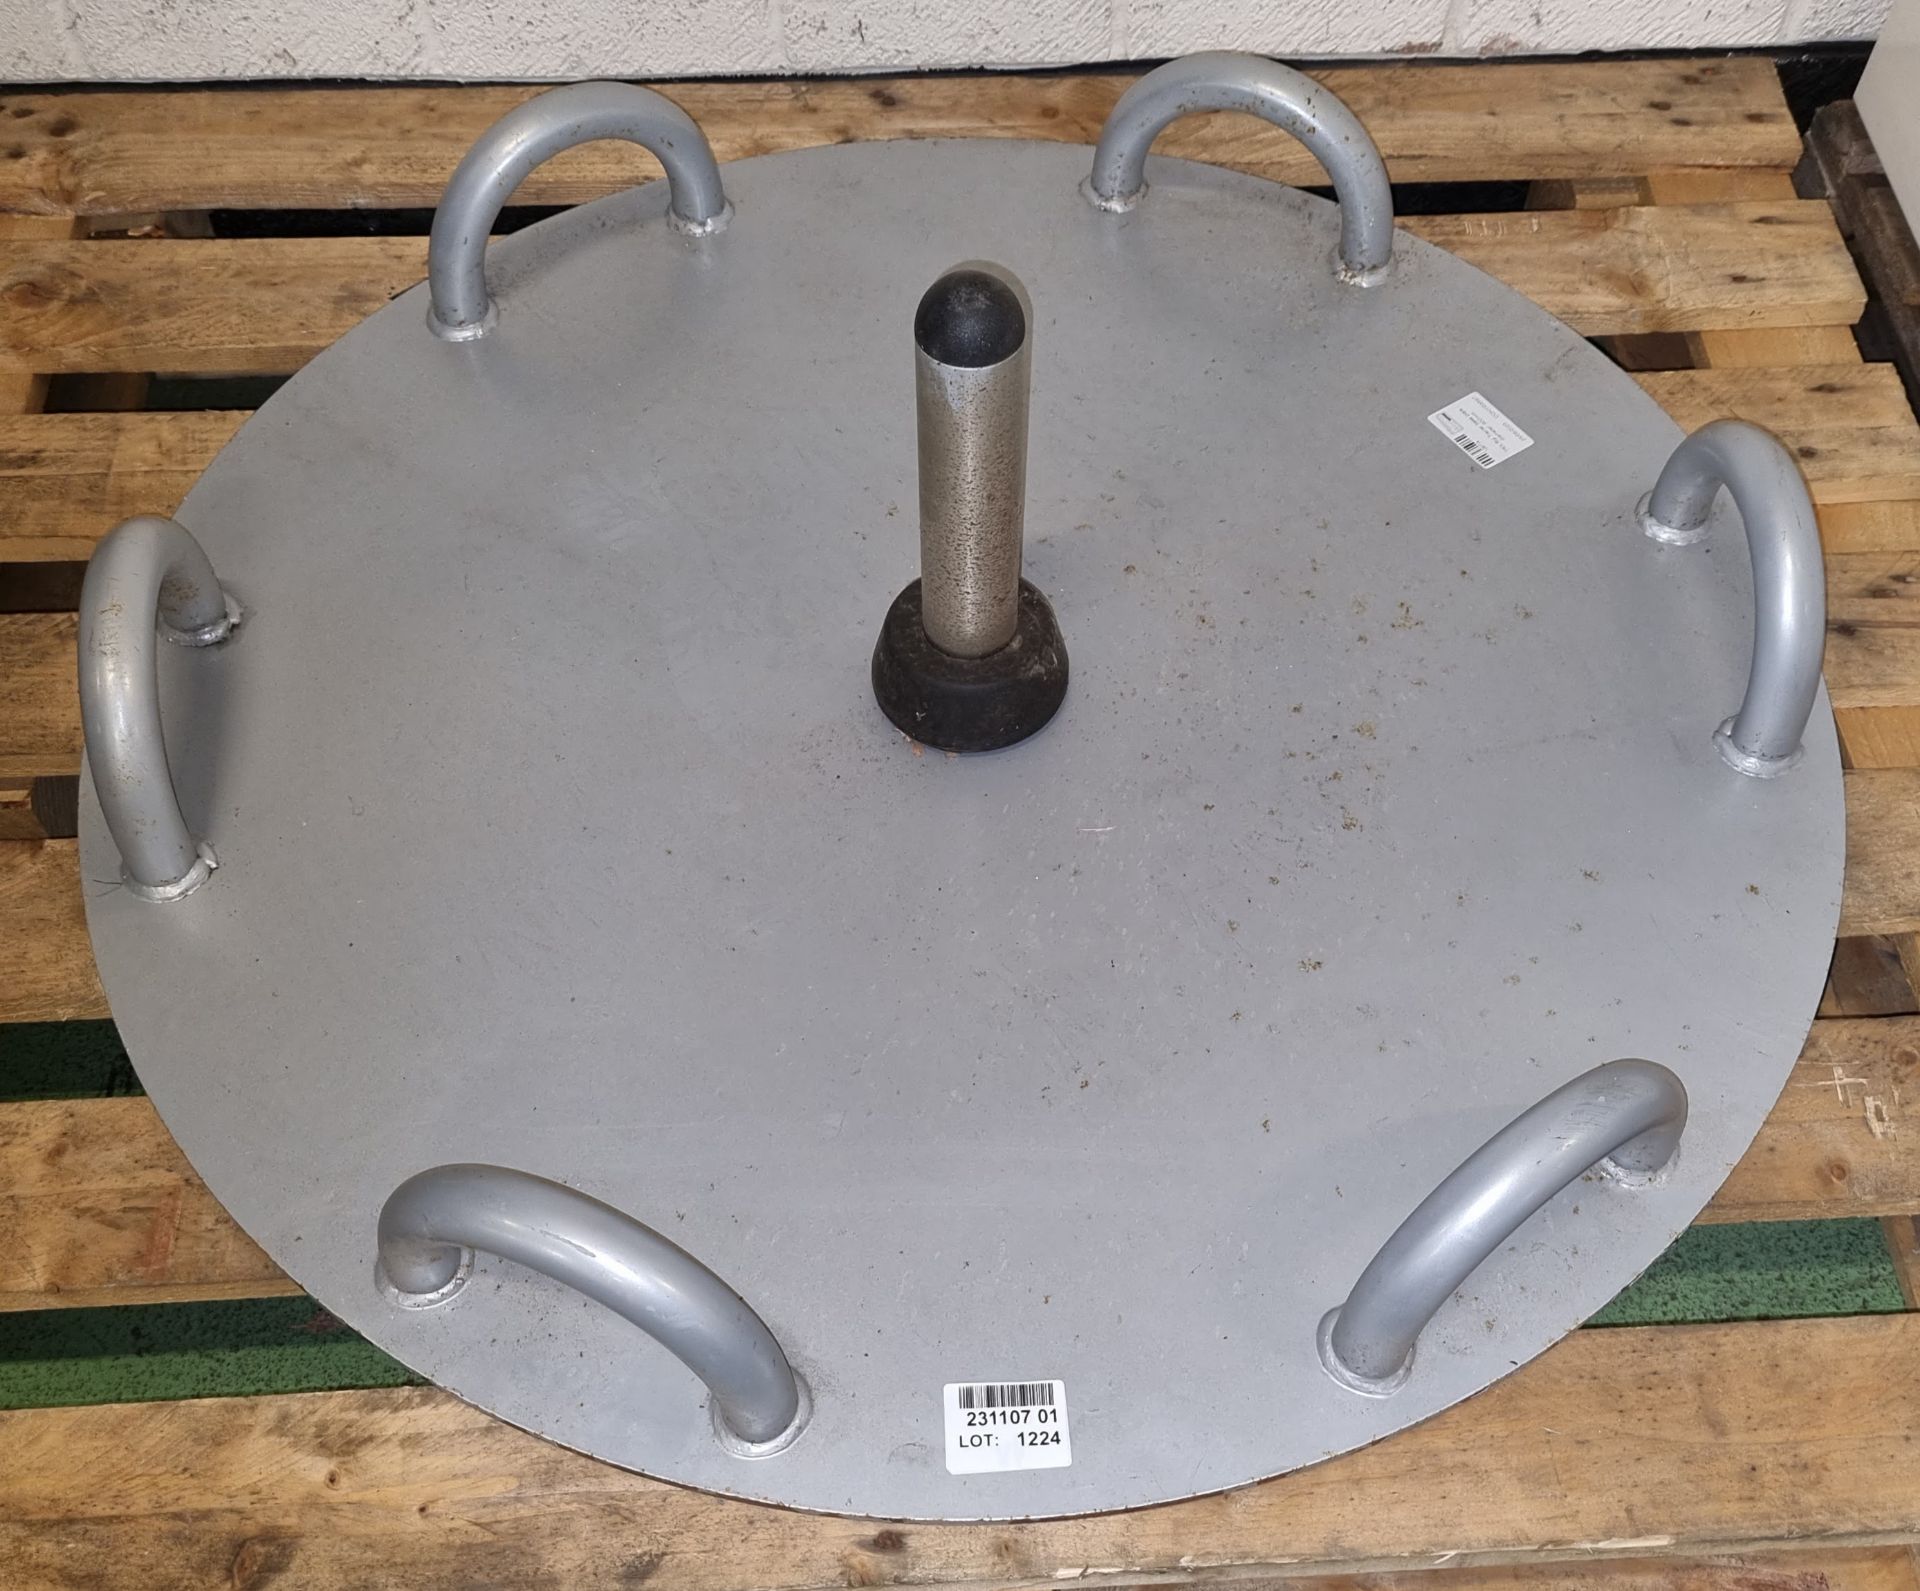 TRX Rip Trainer base plate - diameter: 900mm